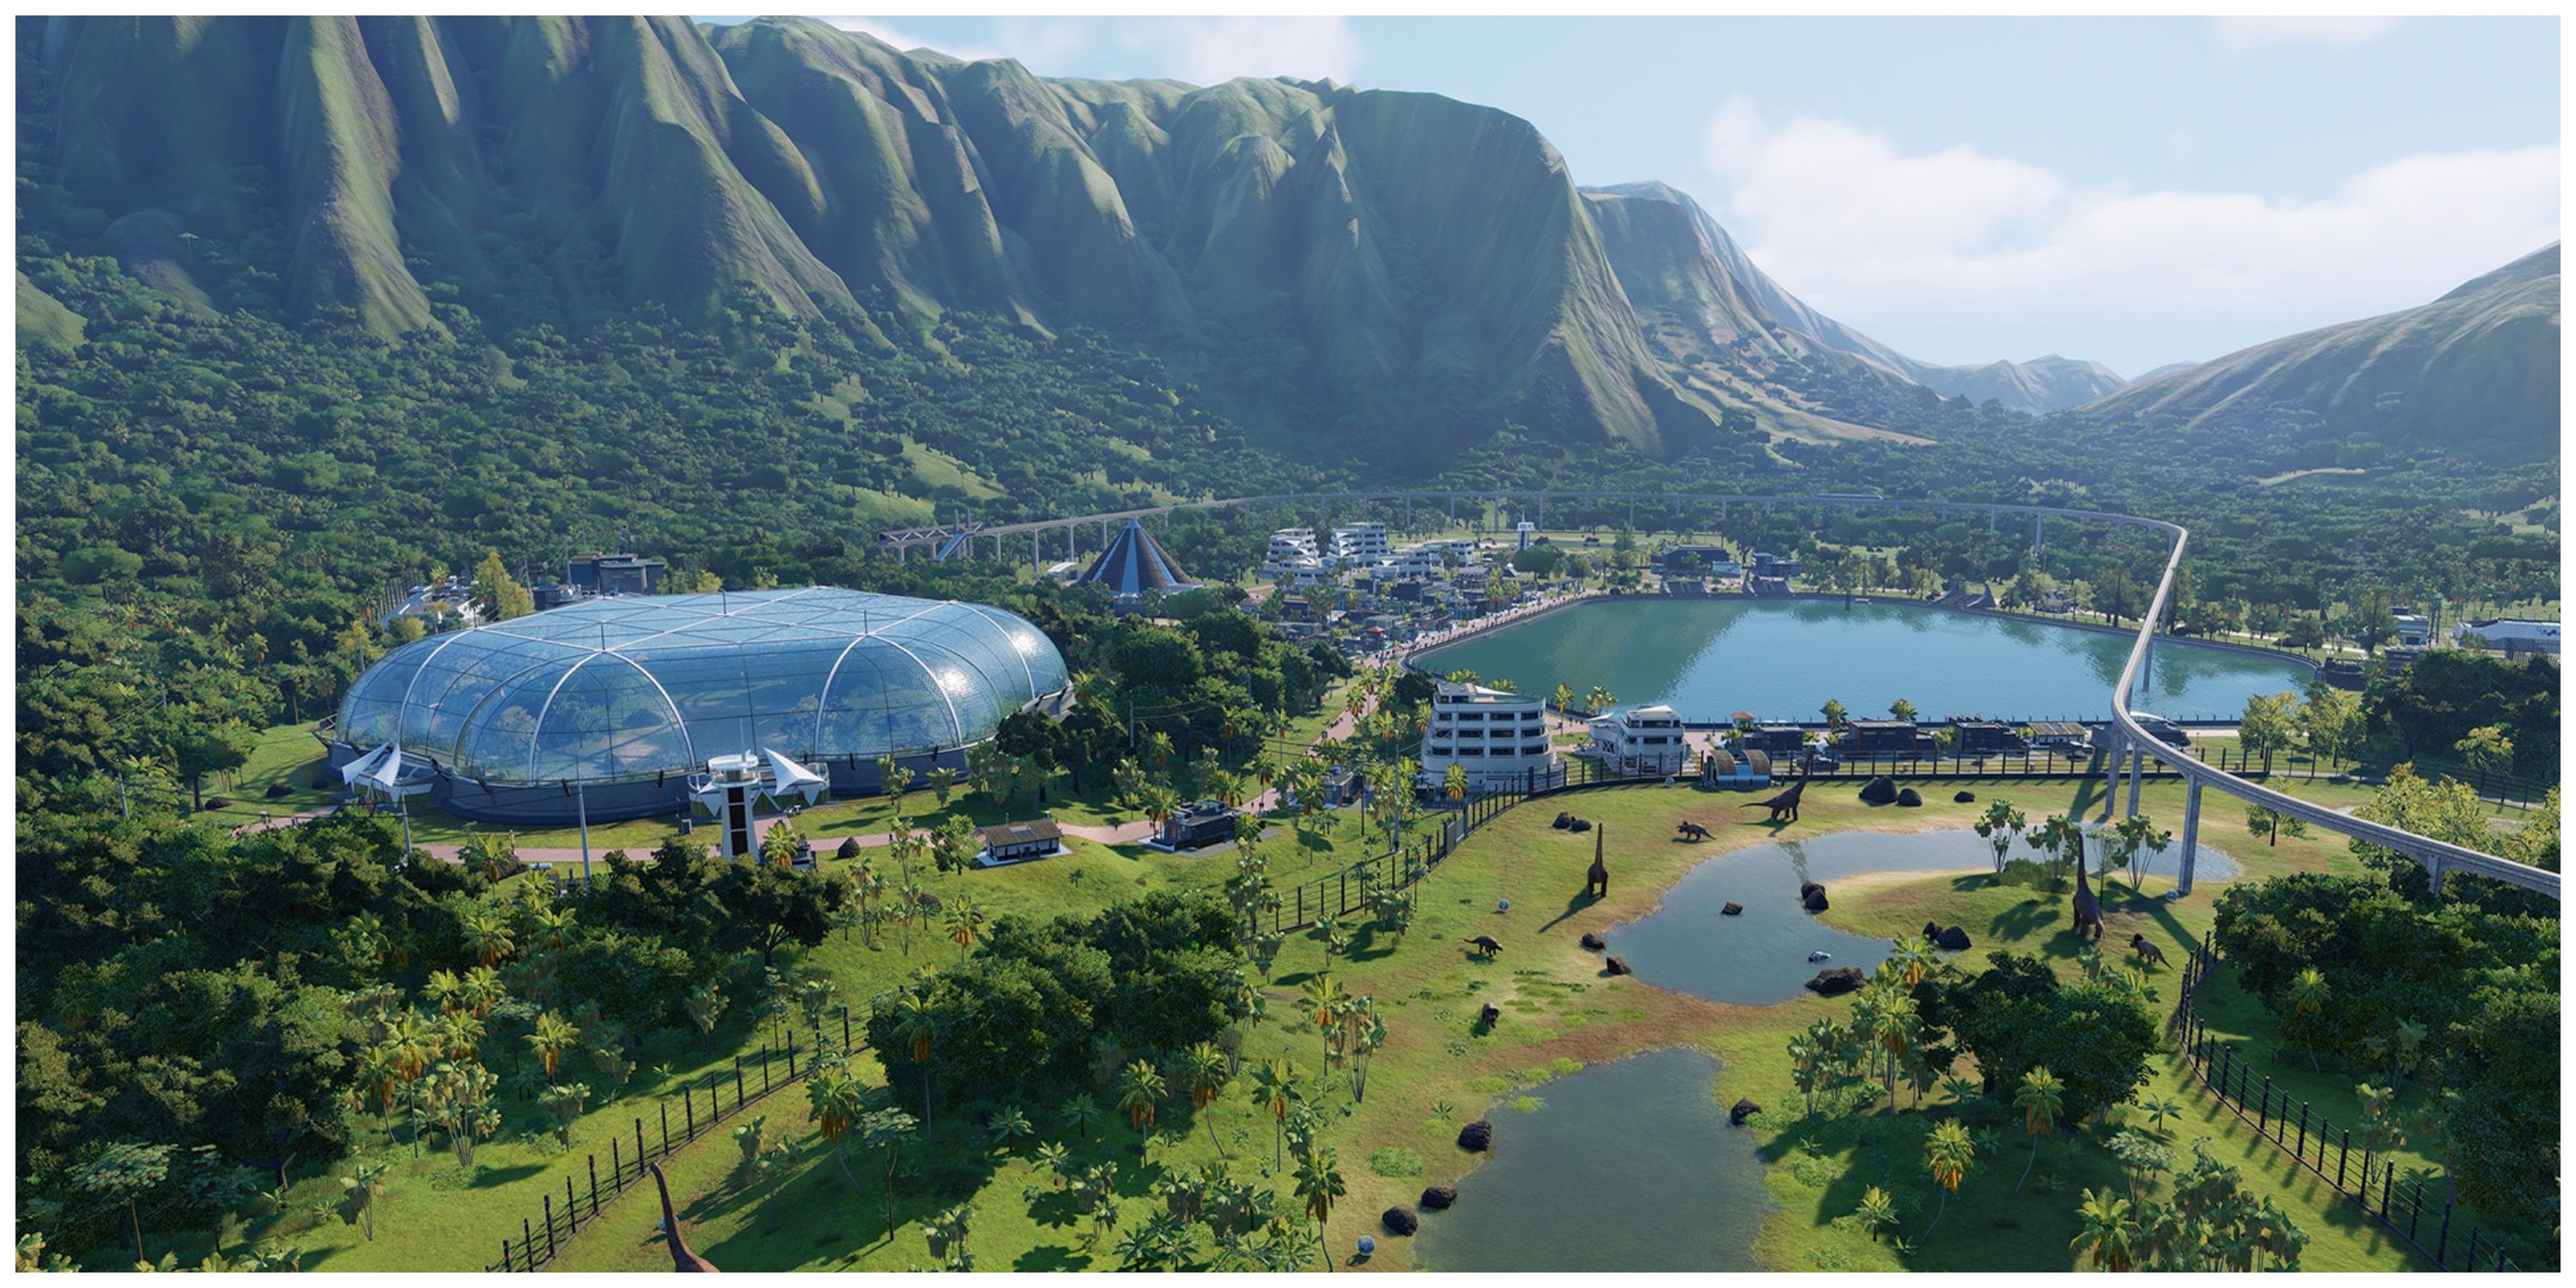 Jurassic World Evolution 2 - Steam Store Page Screenshot (Overlooking A Park)